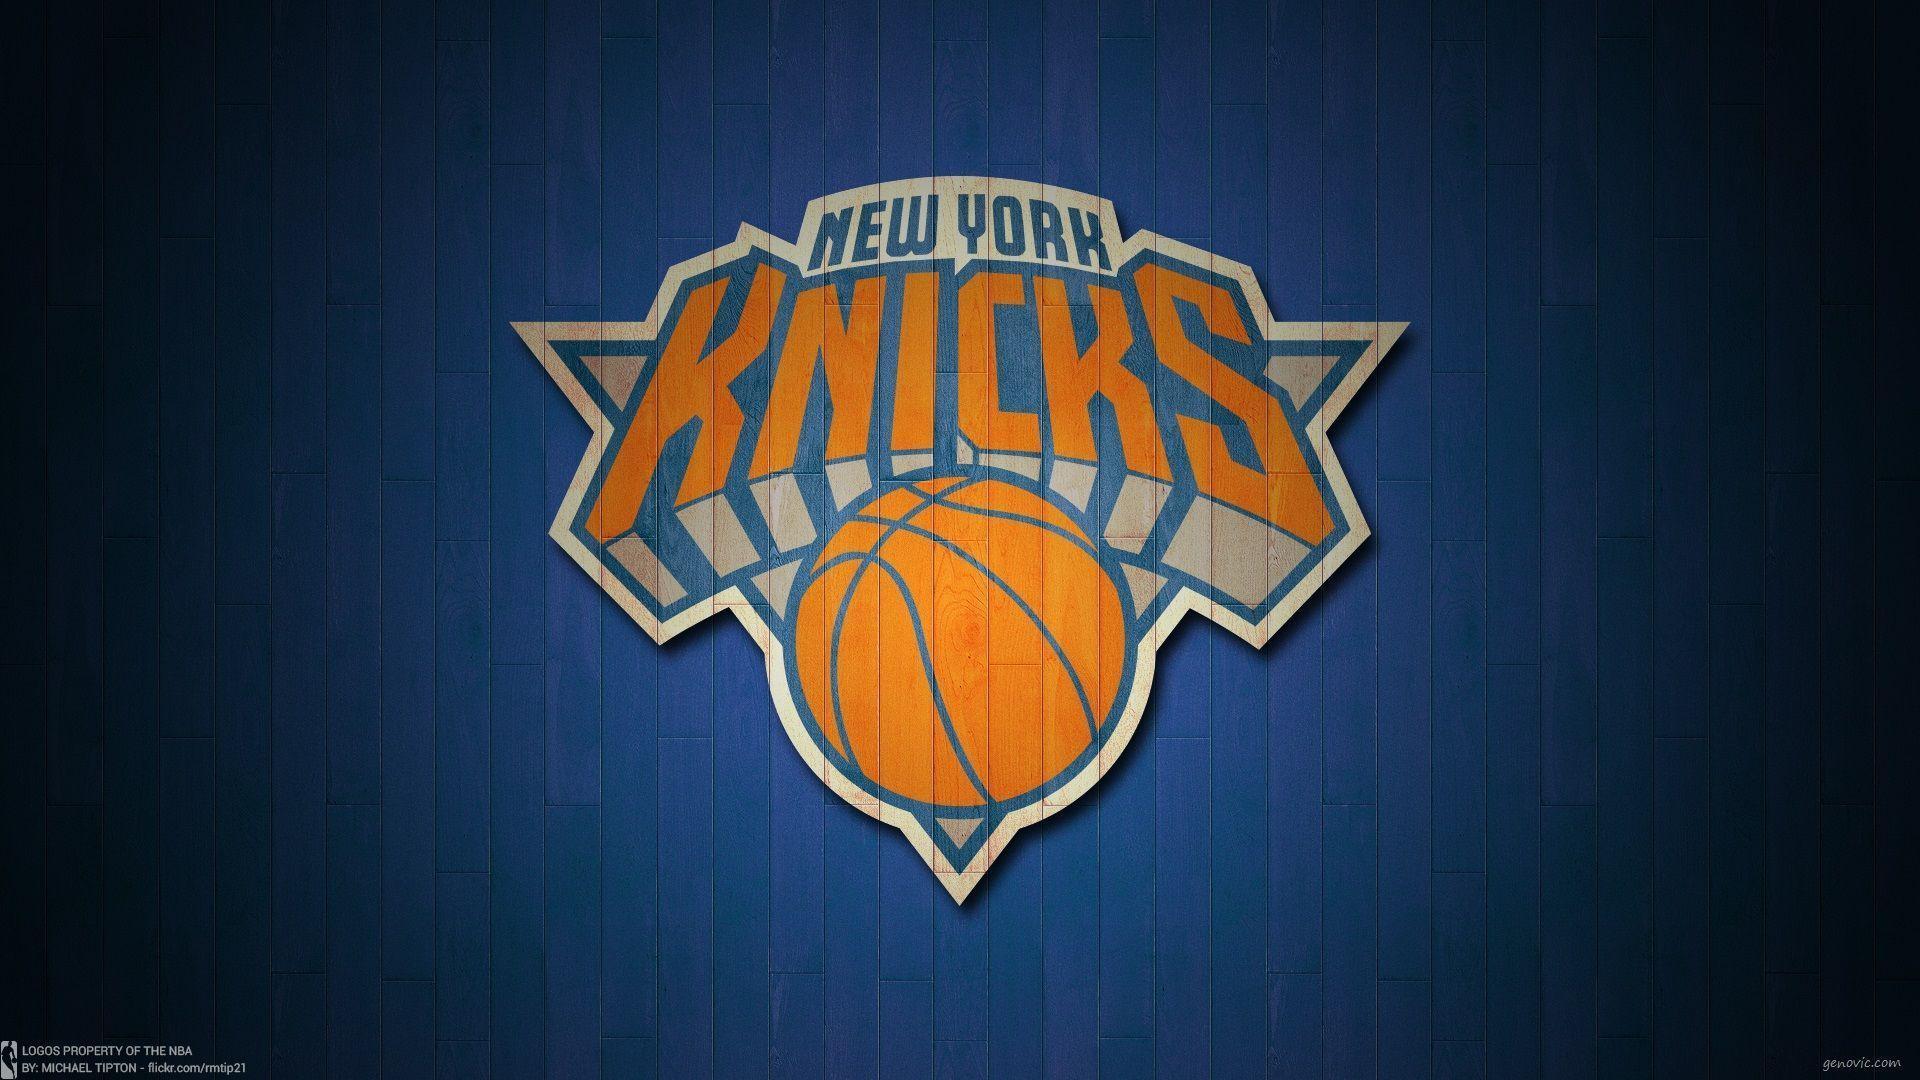 Ny Knicks Wallpaper HD Image 7 Download. Wallpaperiz